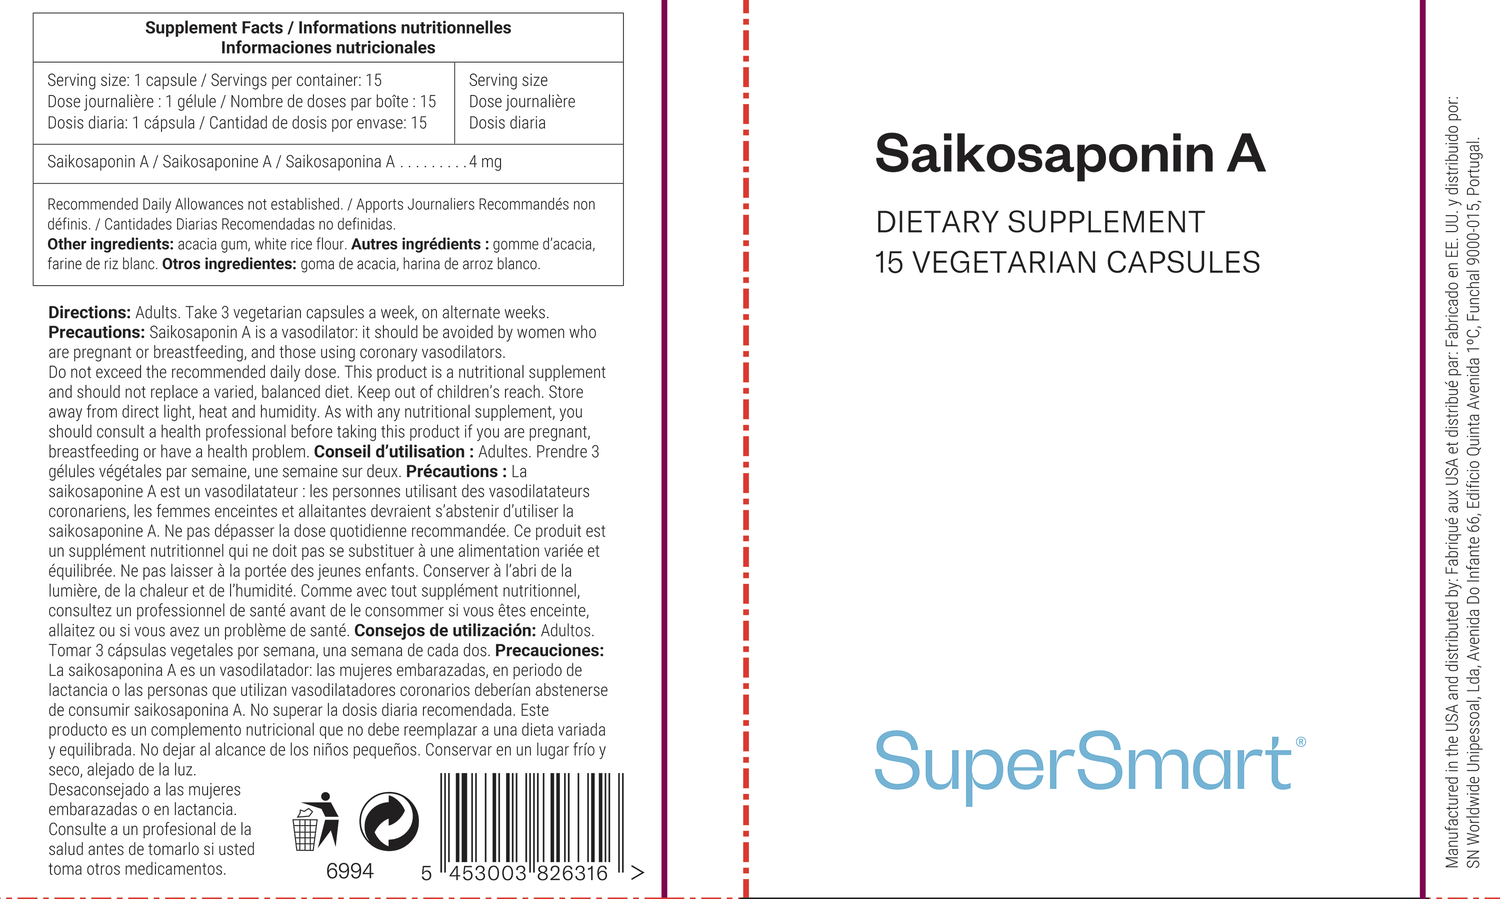 Saikosaponin A Supplement